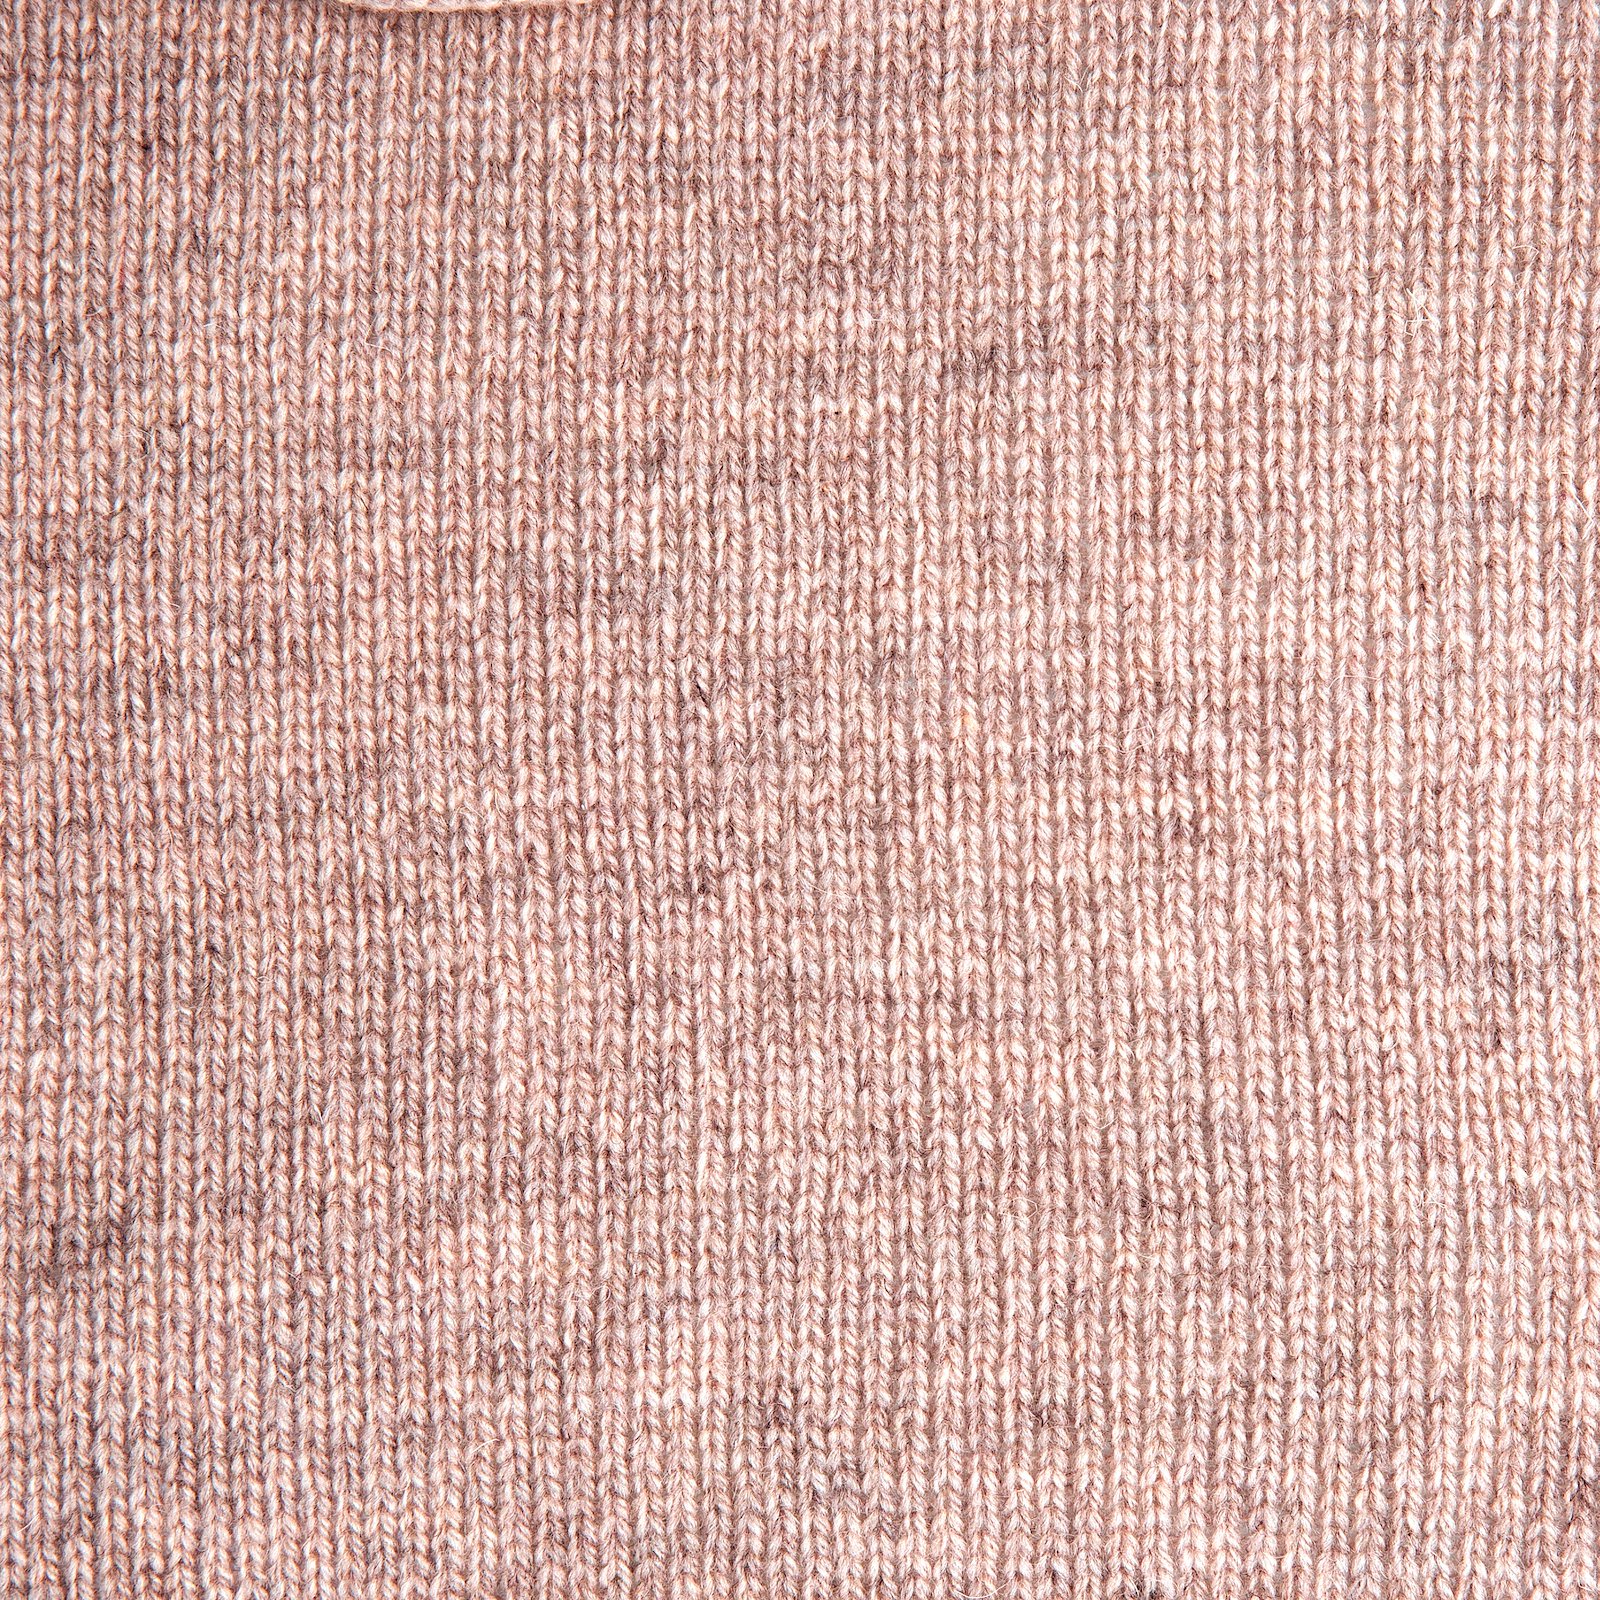 FRAYA, 100% wool yarn "Mindful", antique rose melange 90053391_sskit